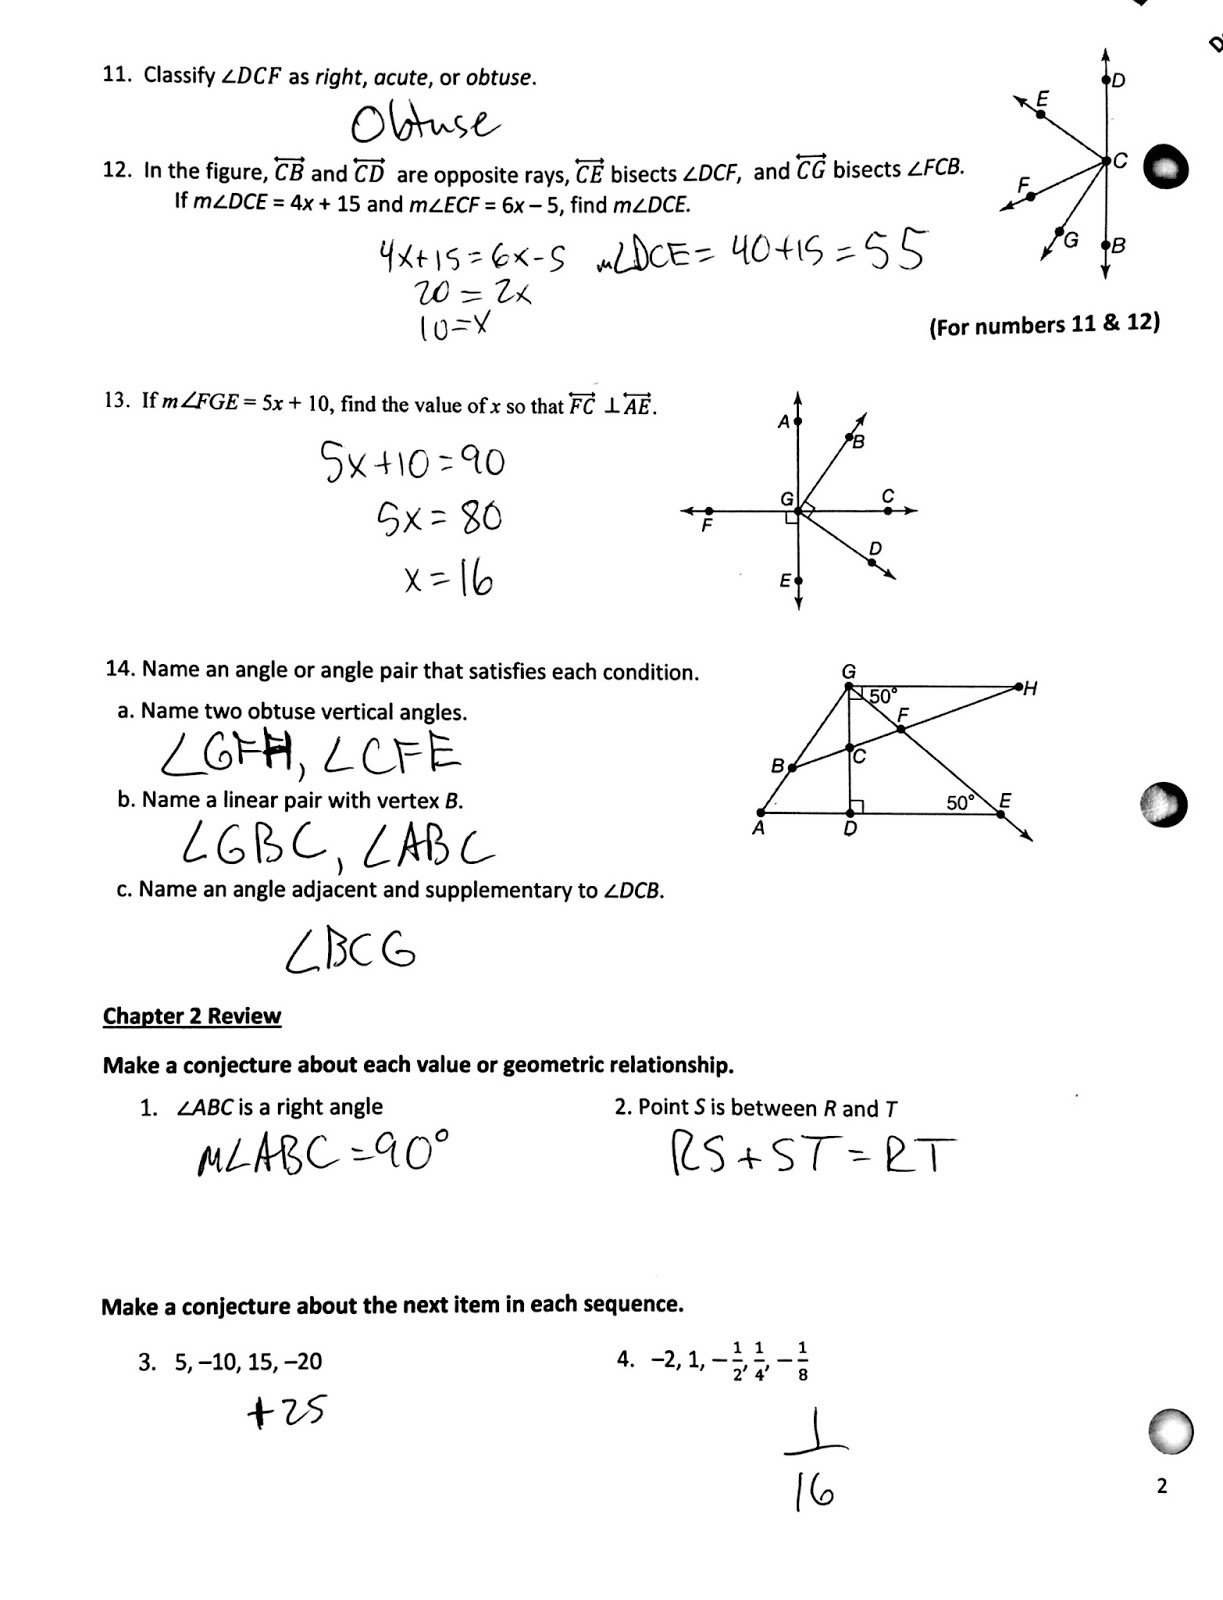 3.2.4 geometry homework answers